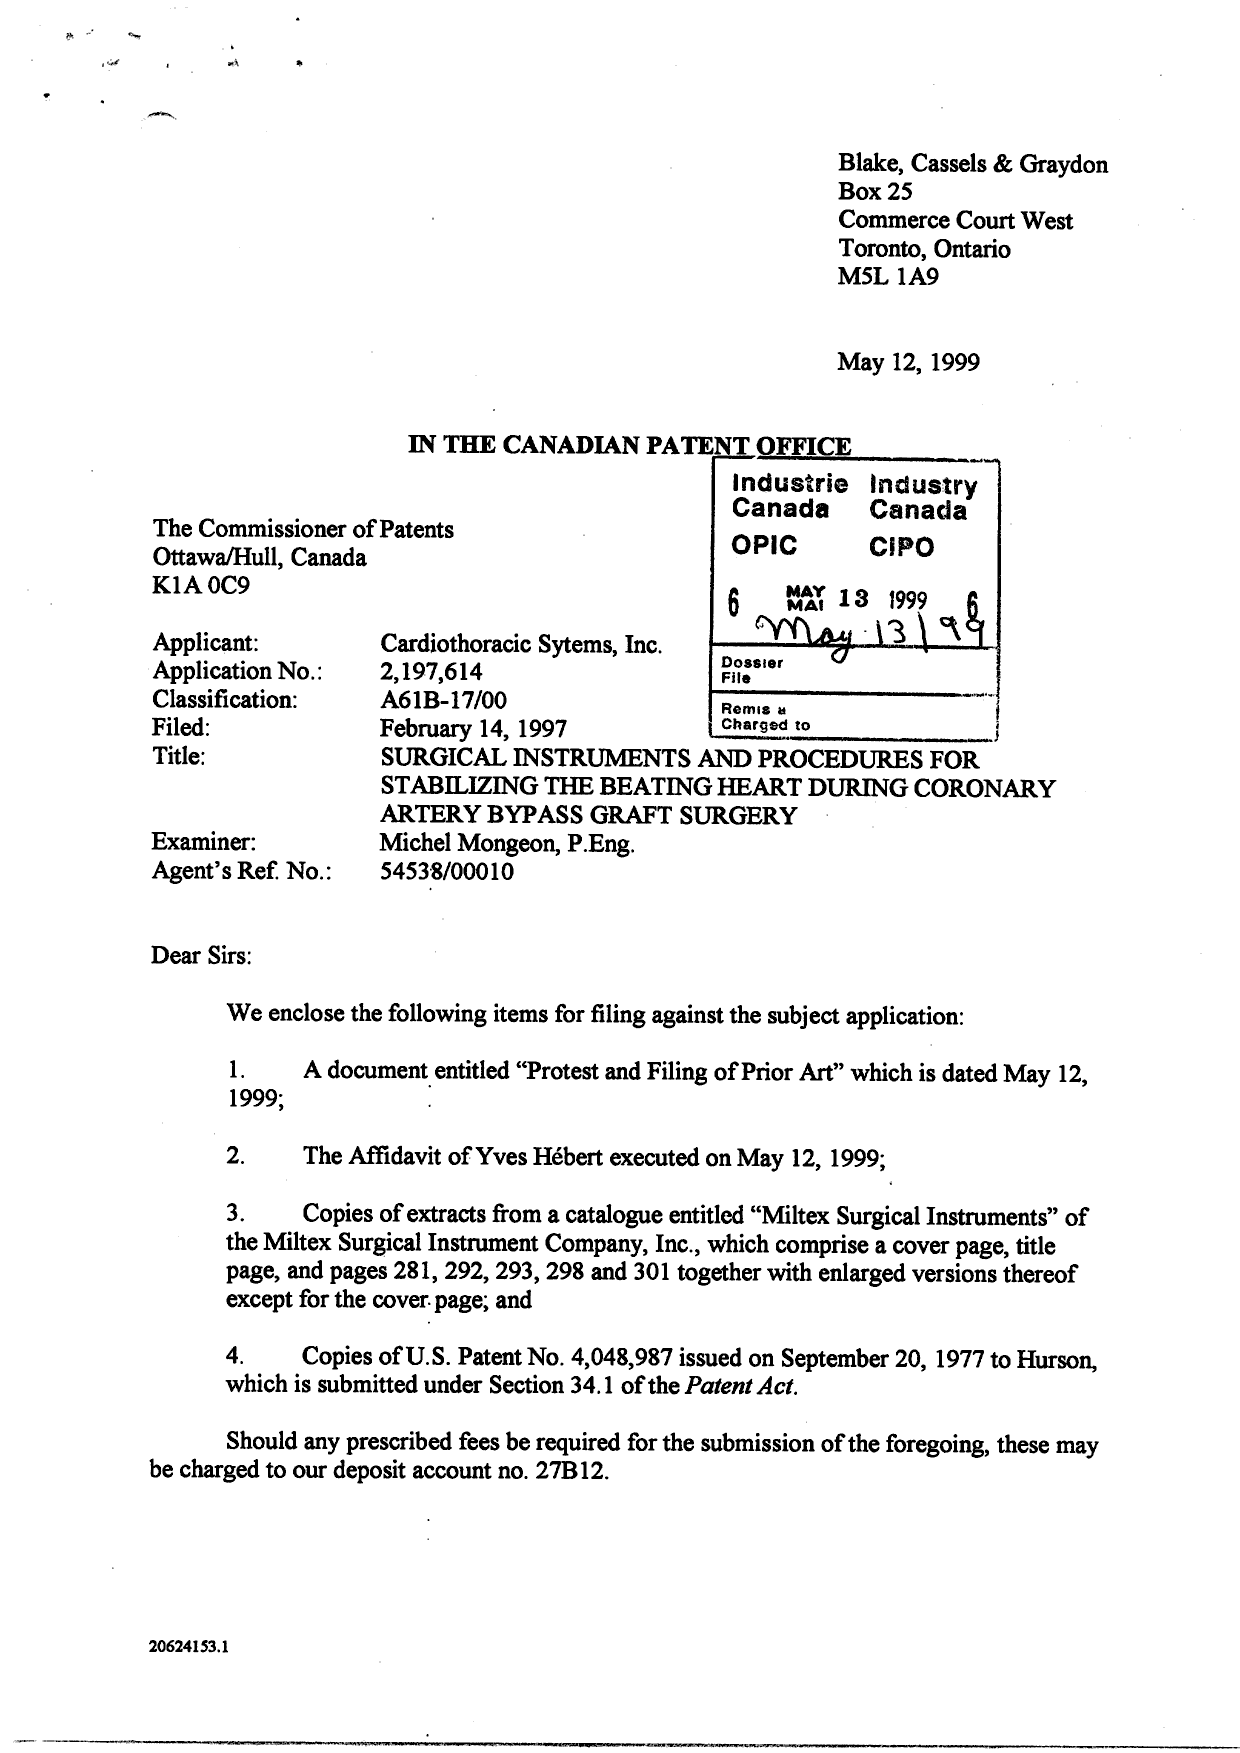 Canadian Patent Document 2197614. Prosecution-Amendment 19990513. Image 1 of 8